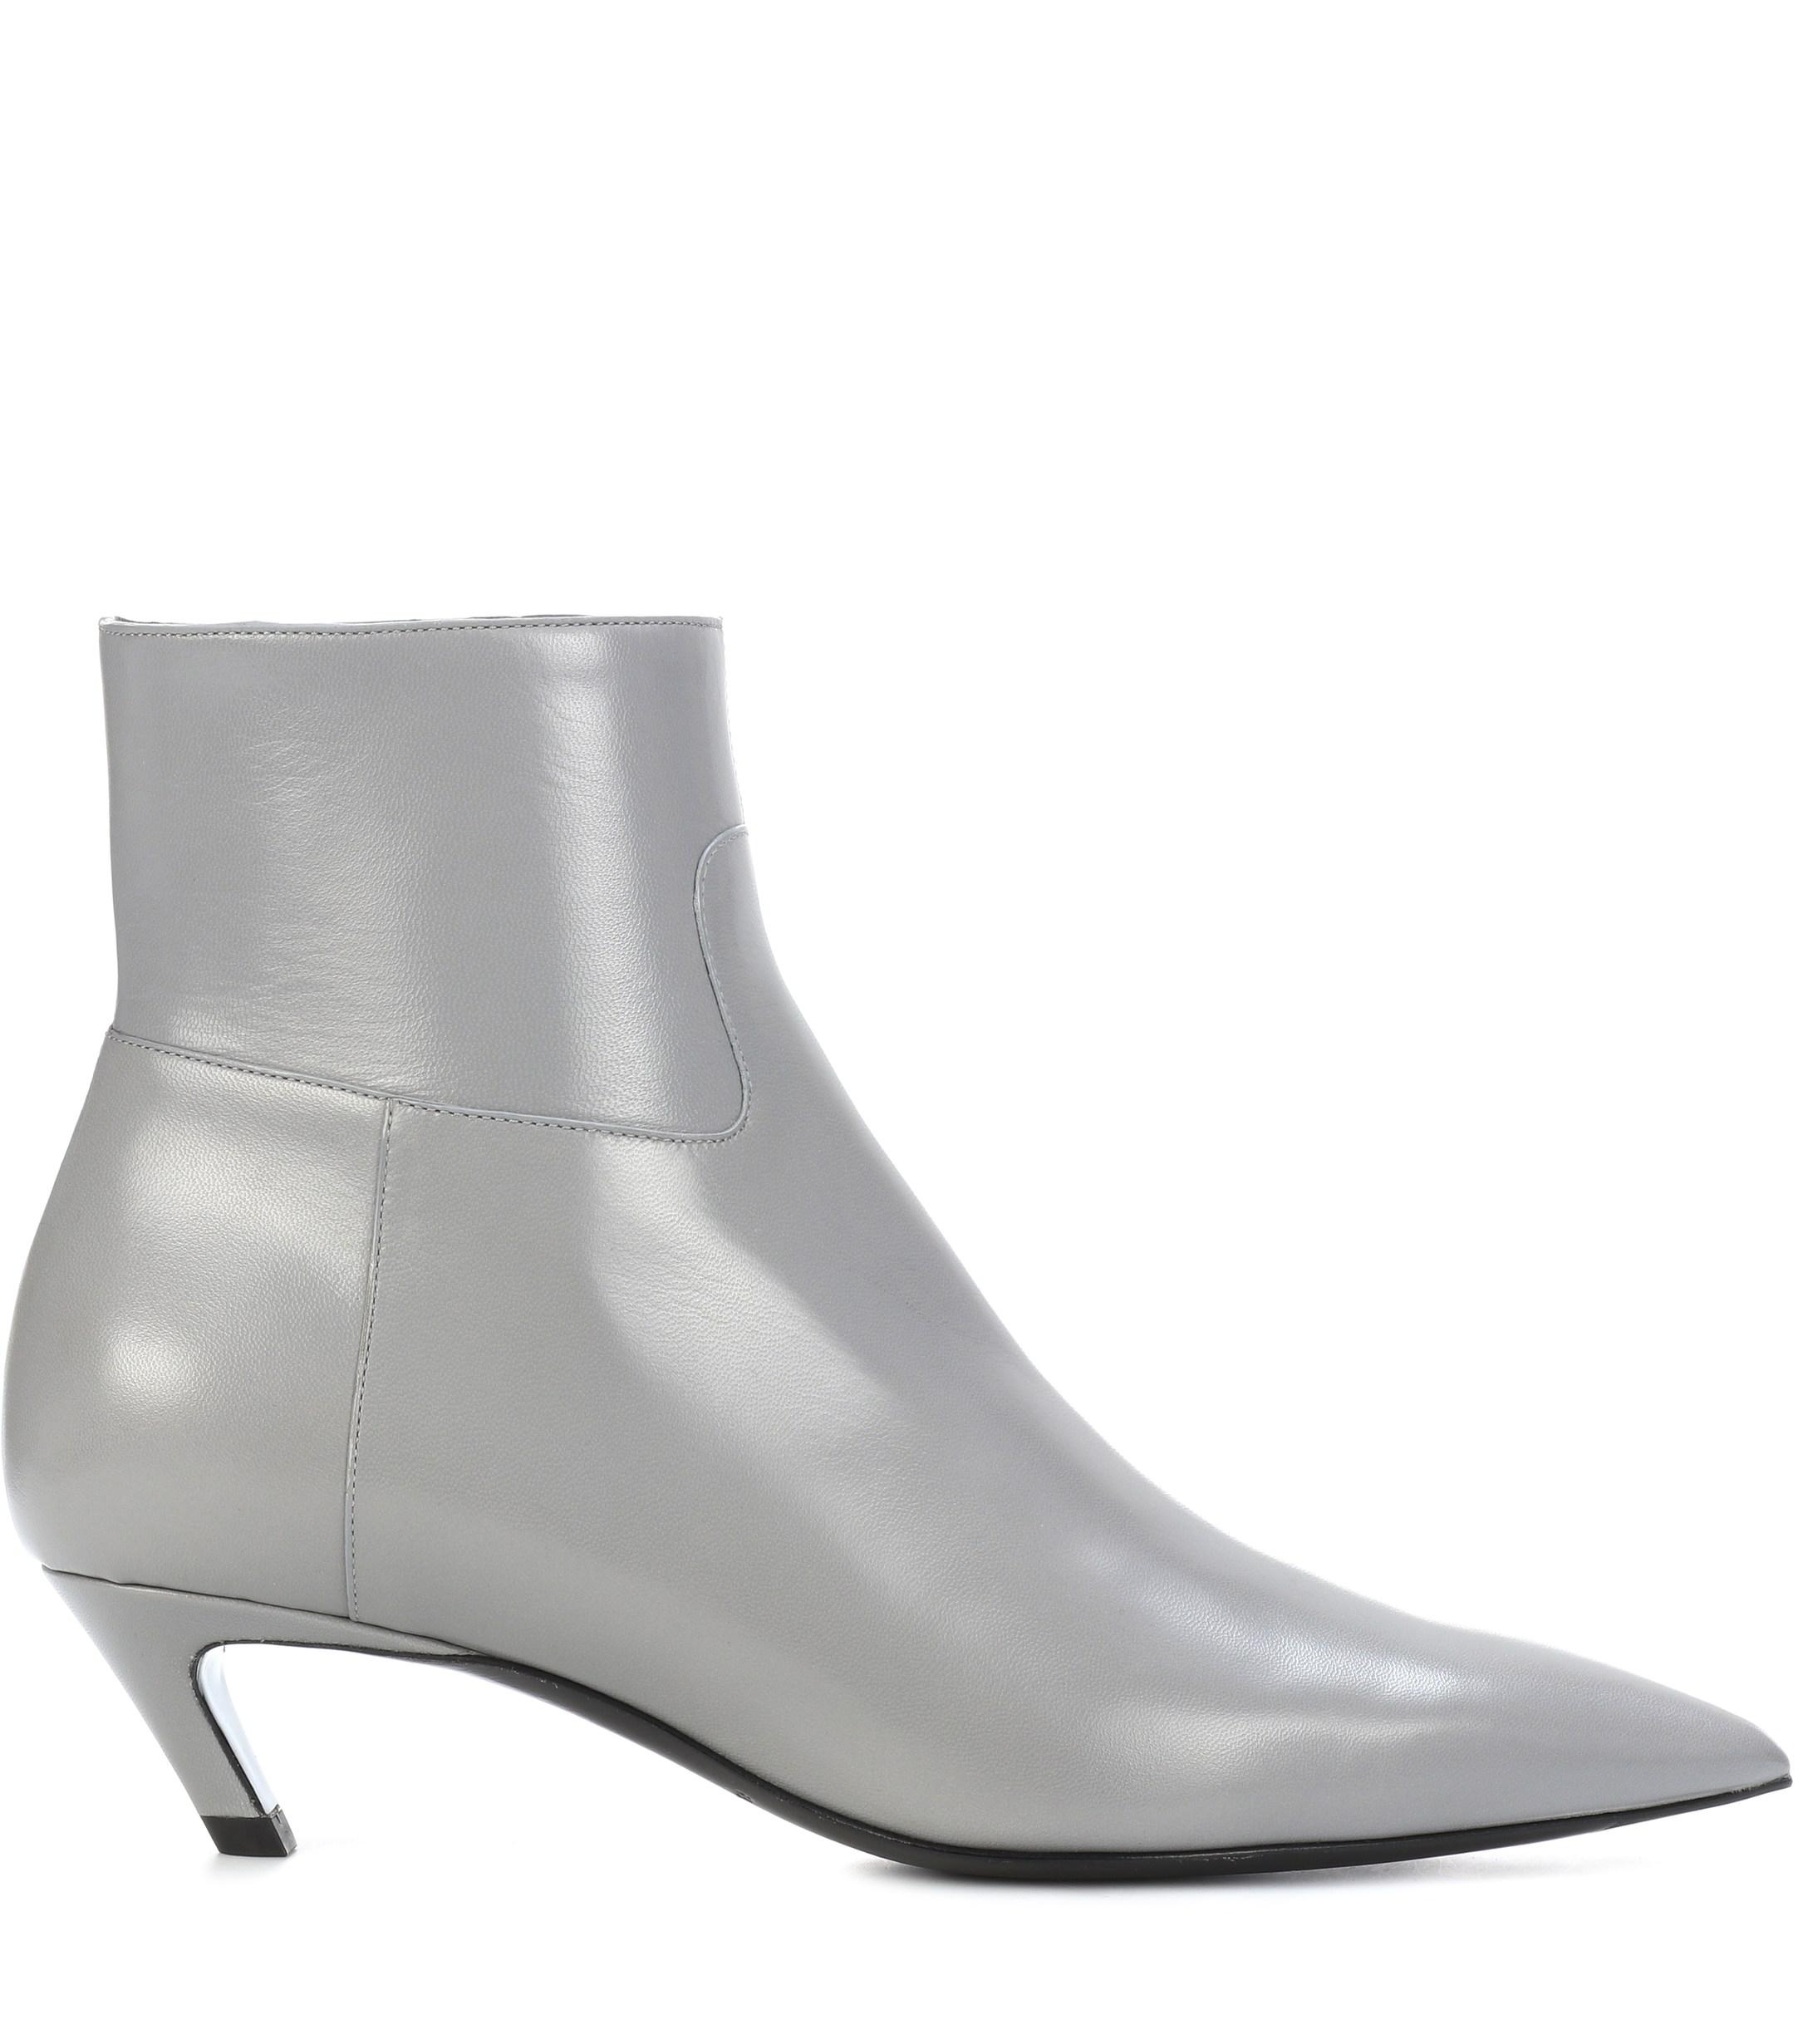 Balenciaga Slash Heel Leather Ankle Boots in Grey (Gray) - Lyst